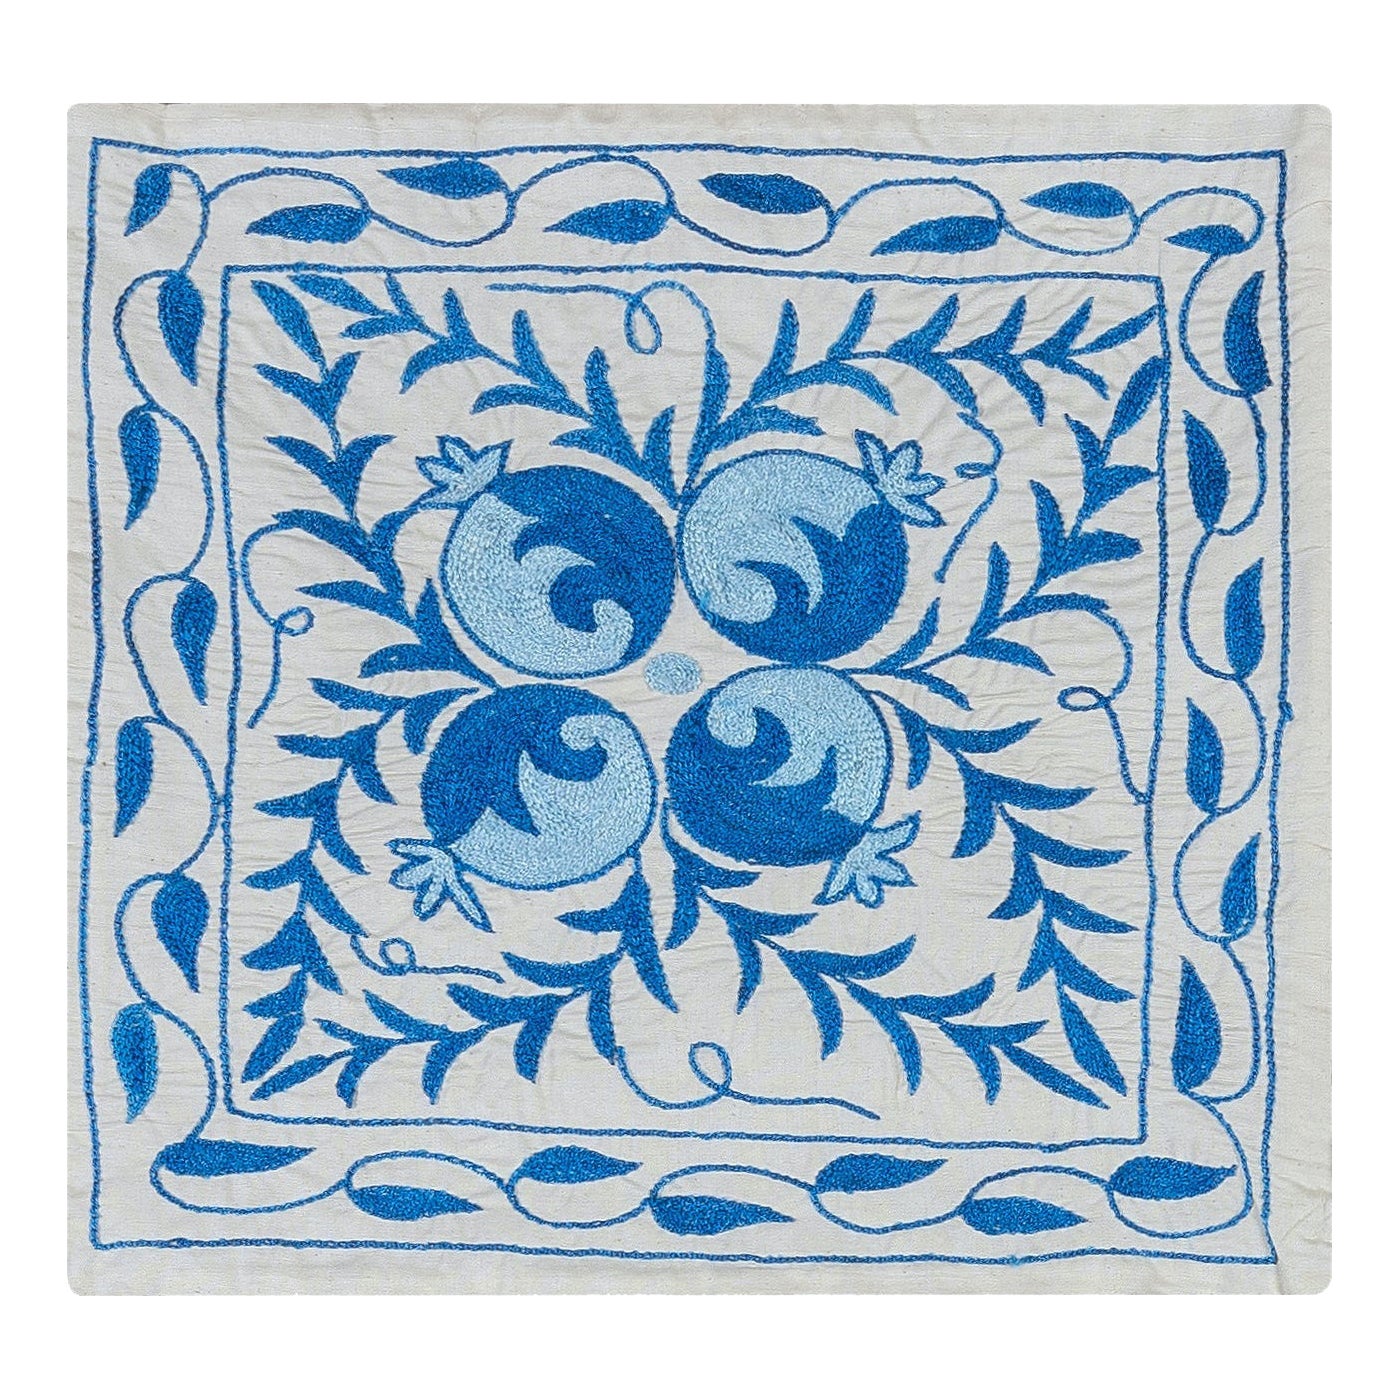 18"x19" Silk Embroidery Suzani Cushion Cover in Cream & Blue, Suzani Lace Pillow For Sale